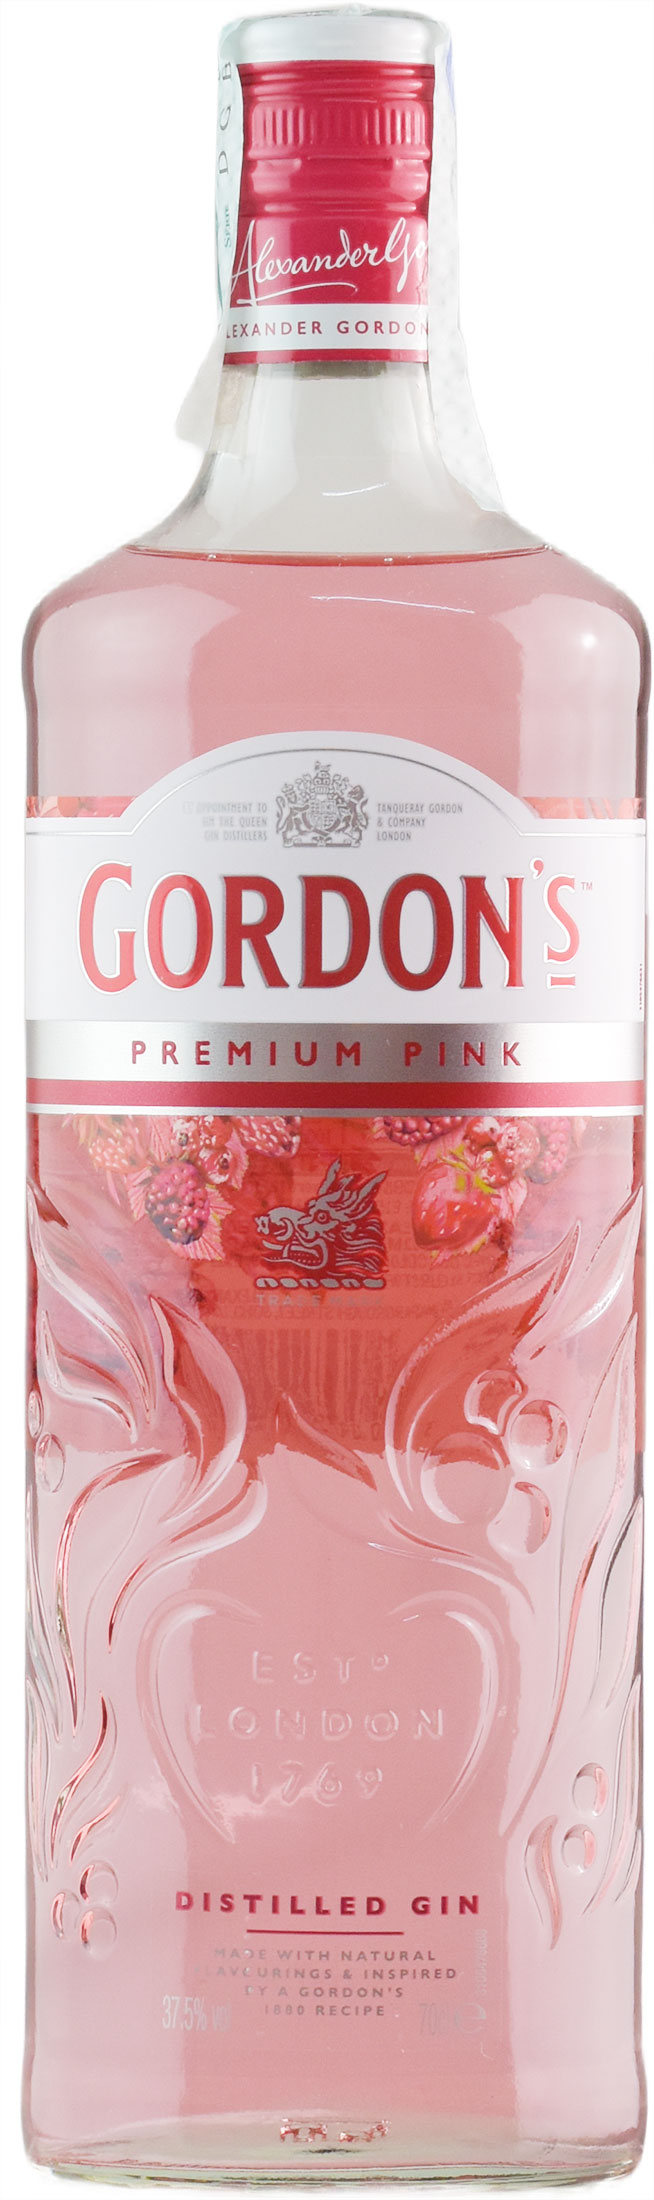 Gordon%27s Premium Pink Gin 0.7L